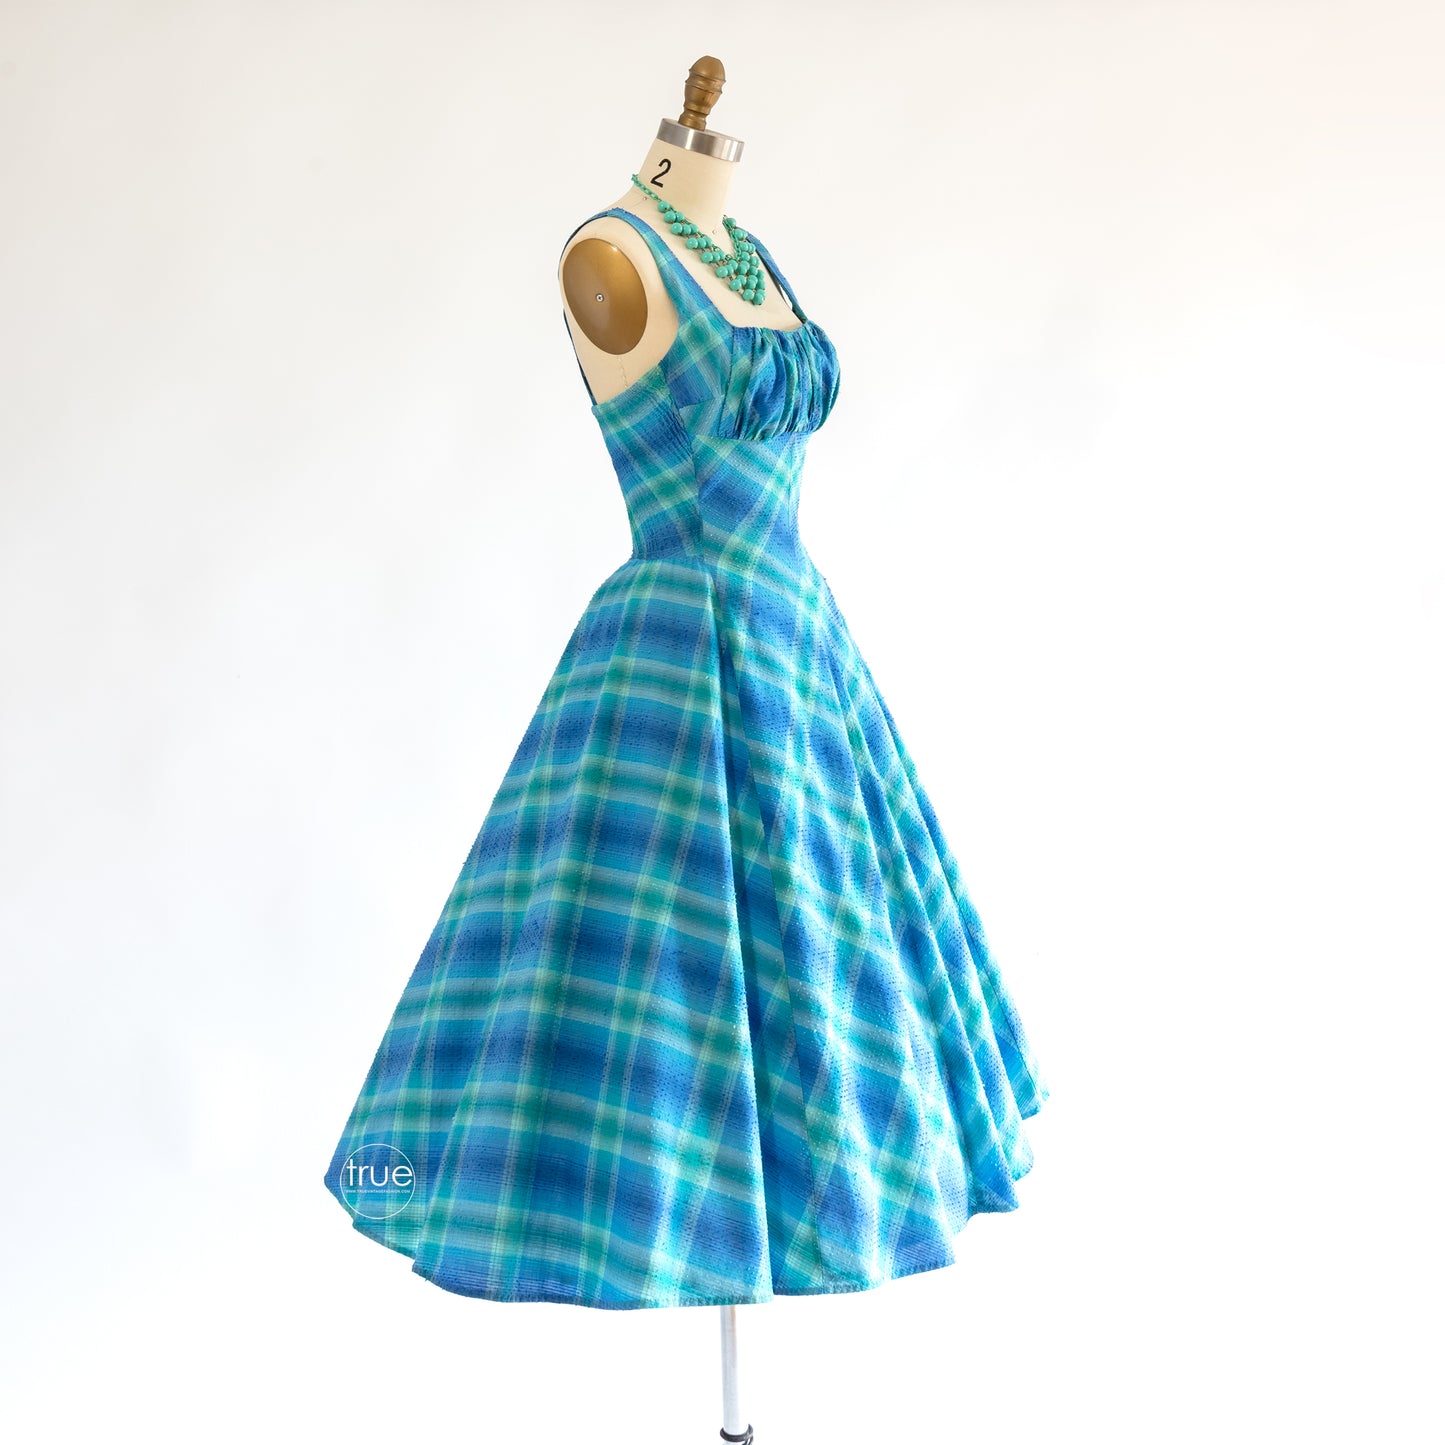 vintage 1950's dress ...summer dream COLE of california gradient madras plaid convertible halter dress